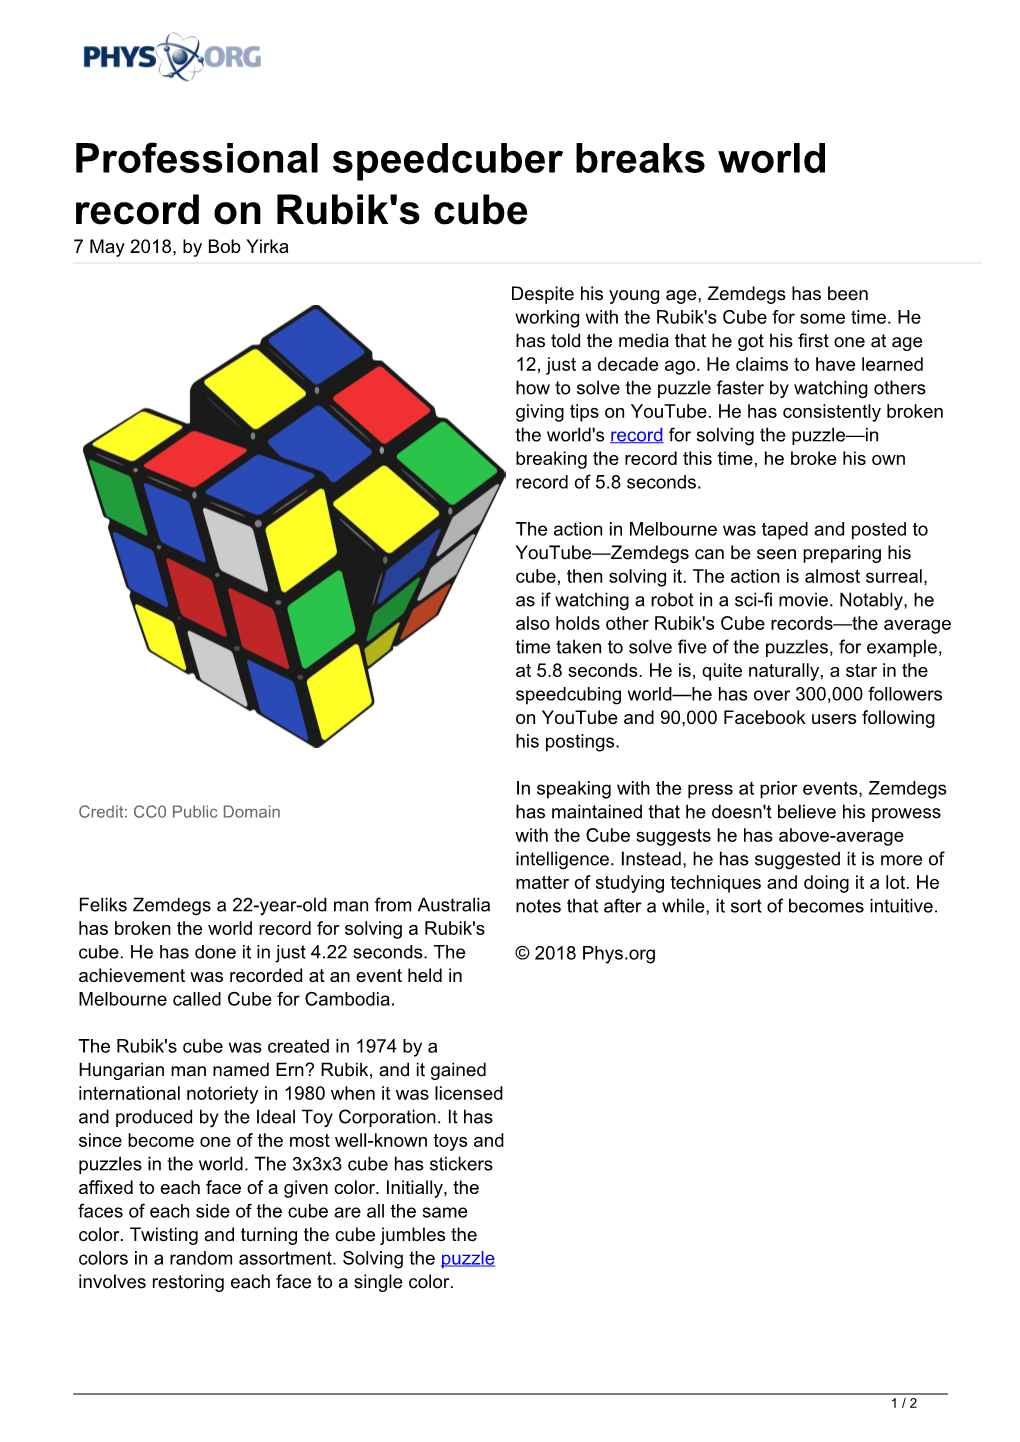 Professional Speedcuber Breaks World Record on Rubik's Cube 7 May 2018, by Bob Yirka